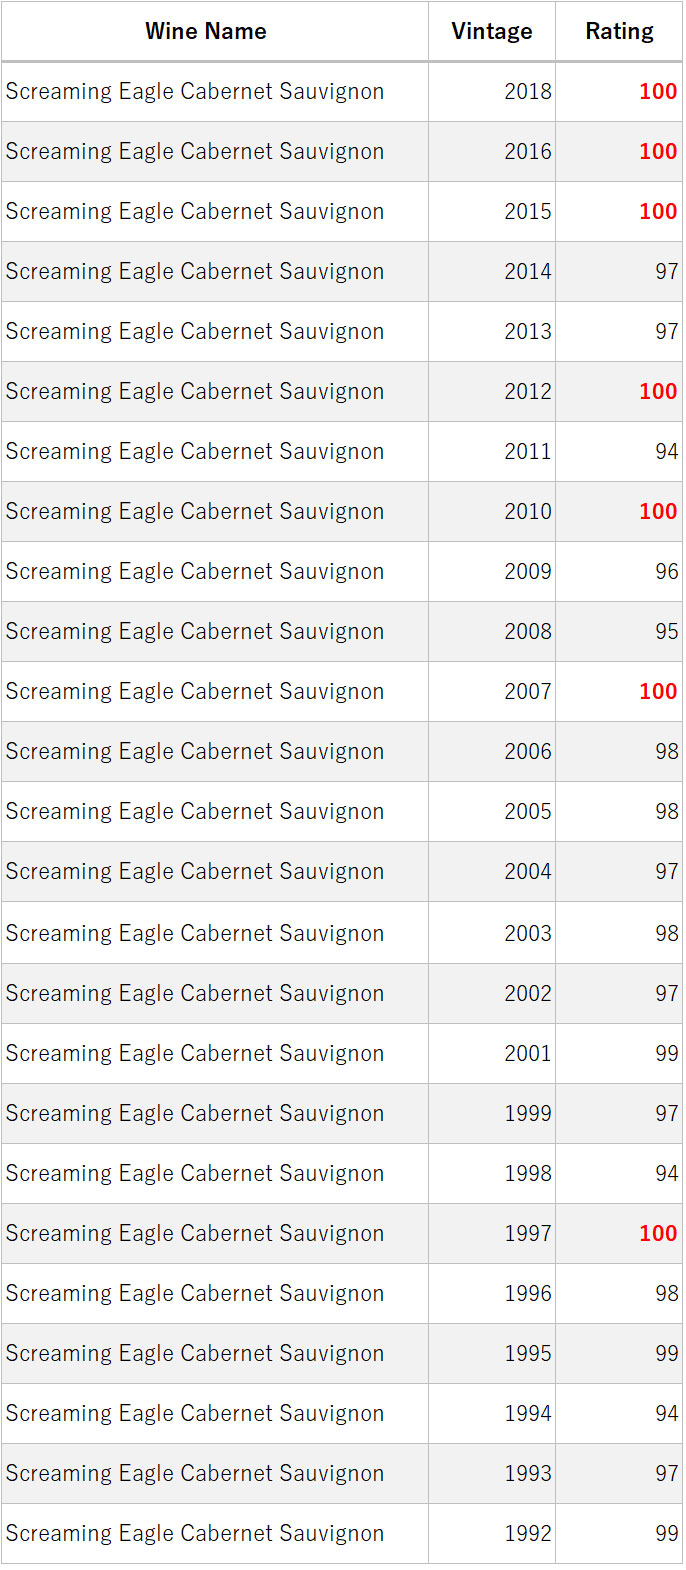 Ratings of Screaming Eagle vintages